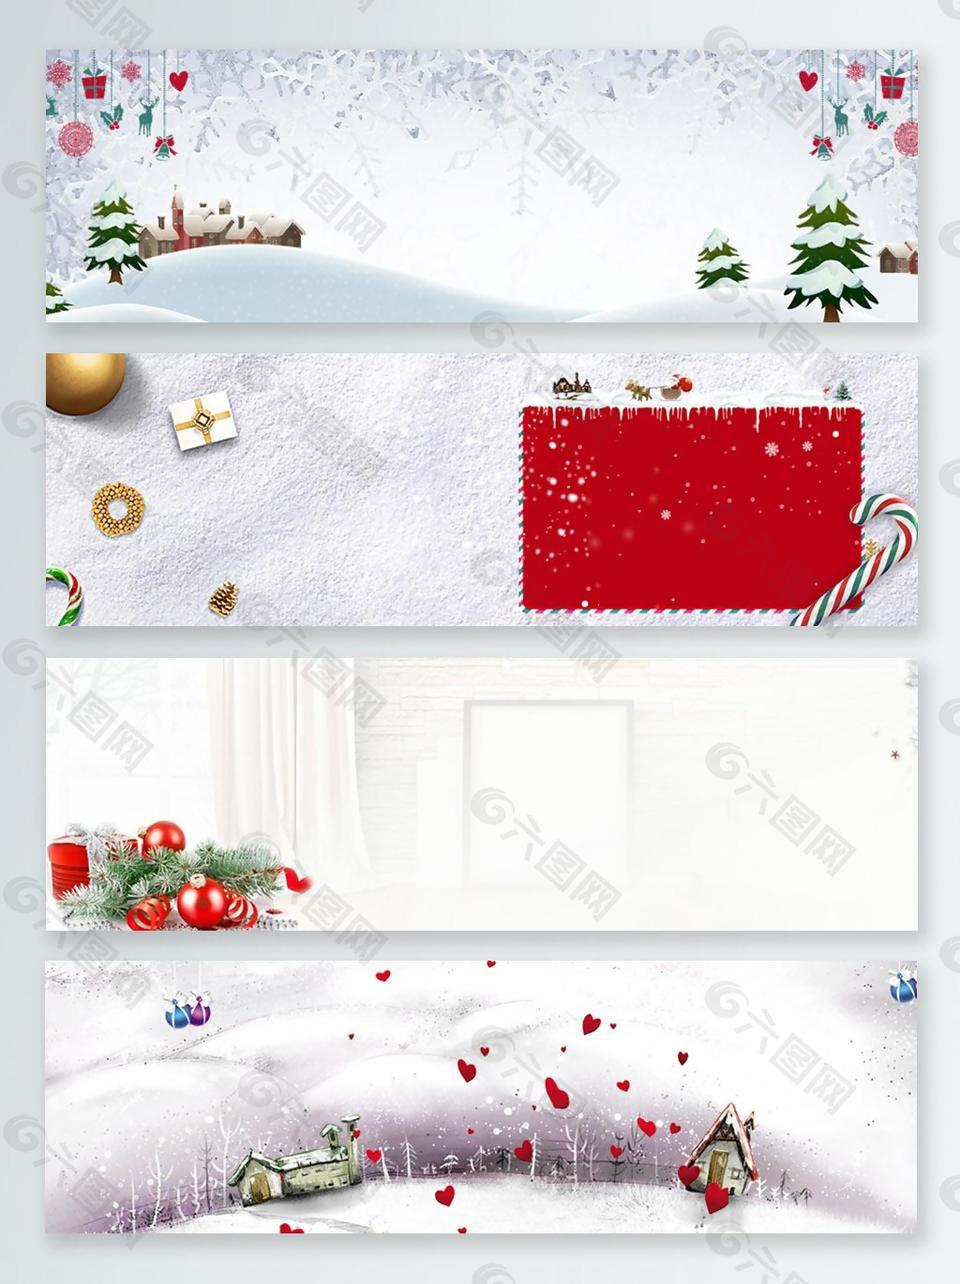 白雪皑皑圣诞装饰banner背景